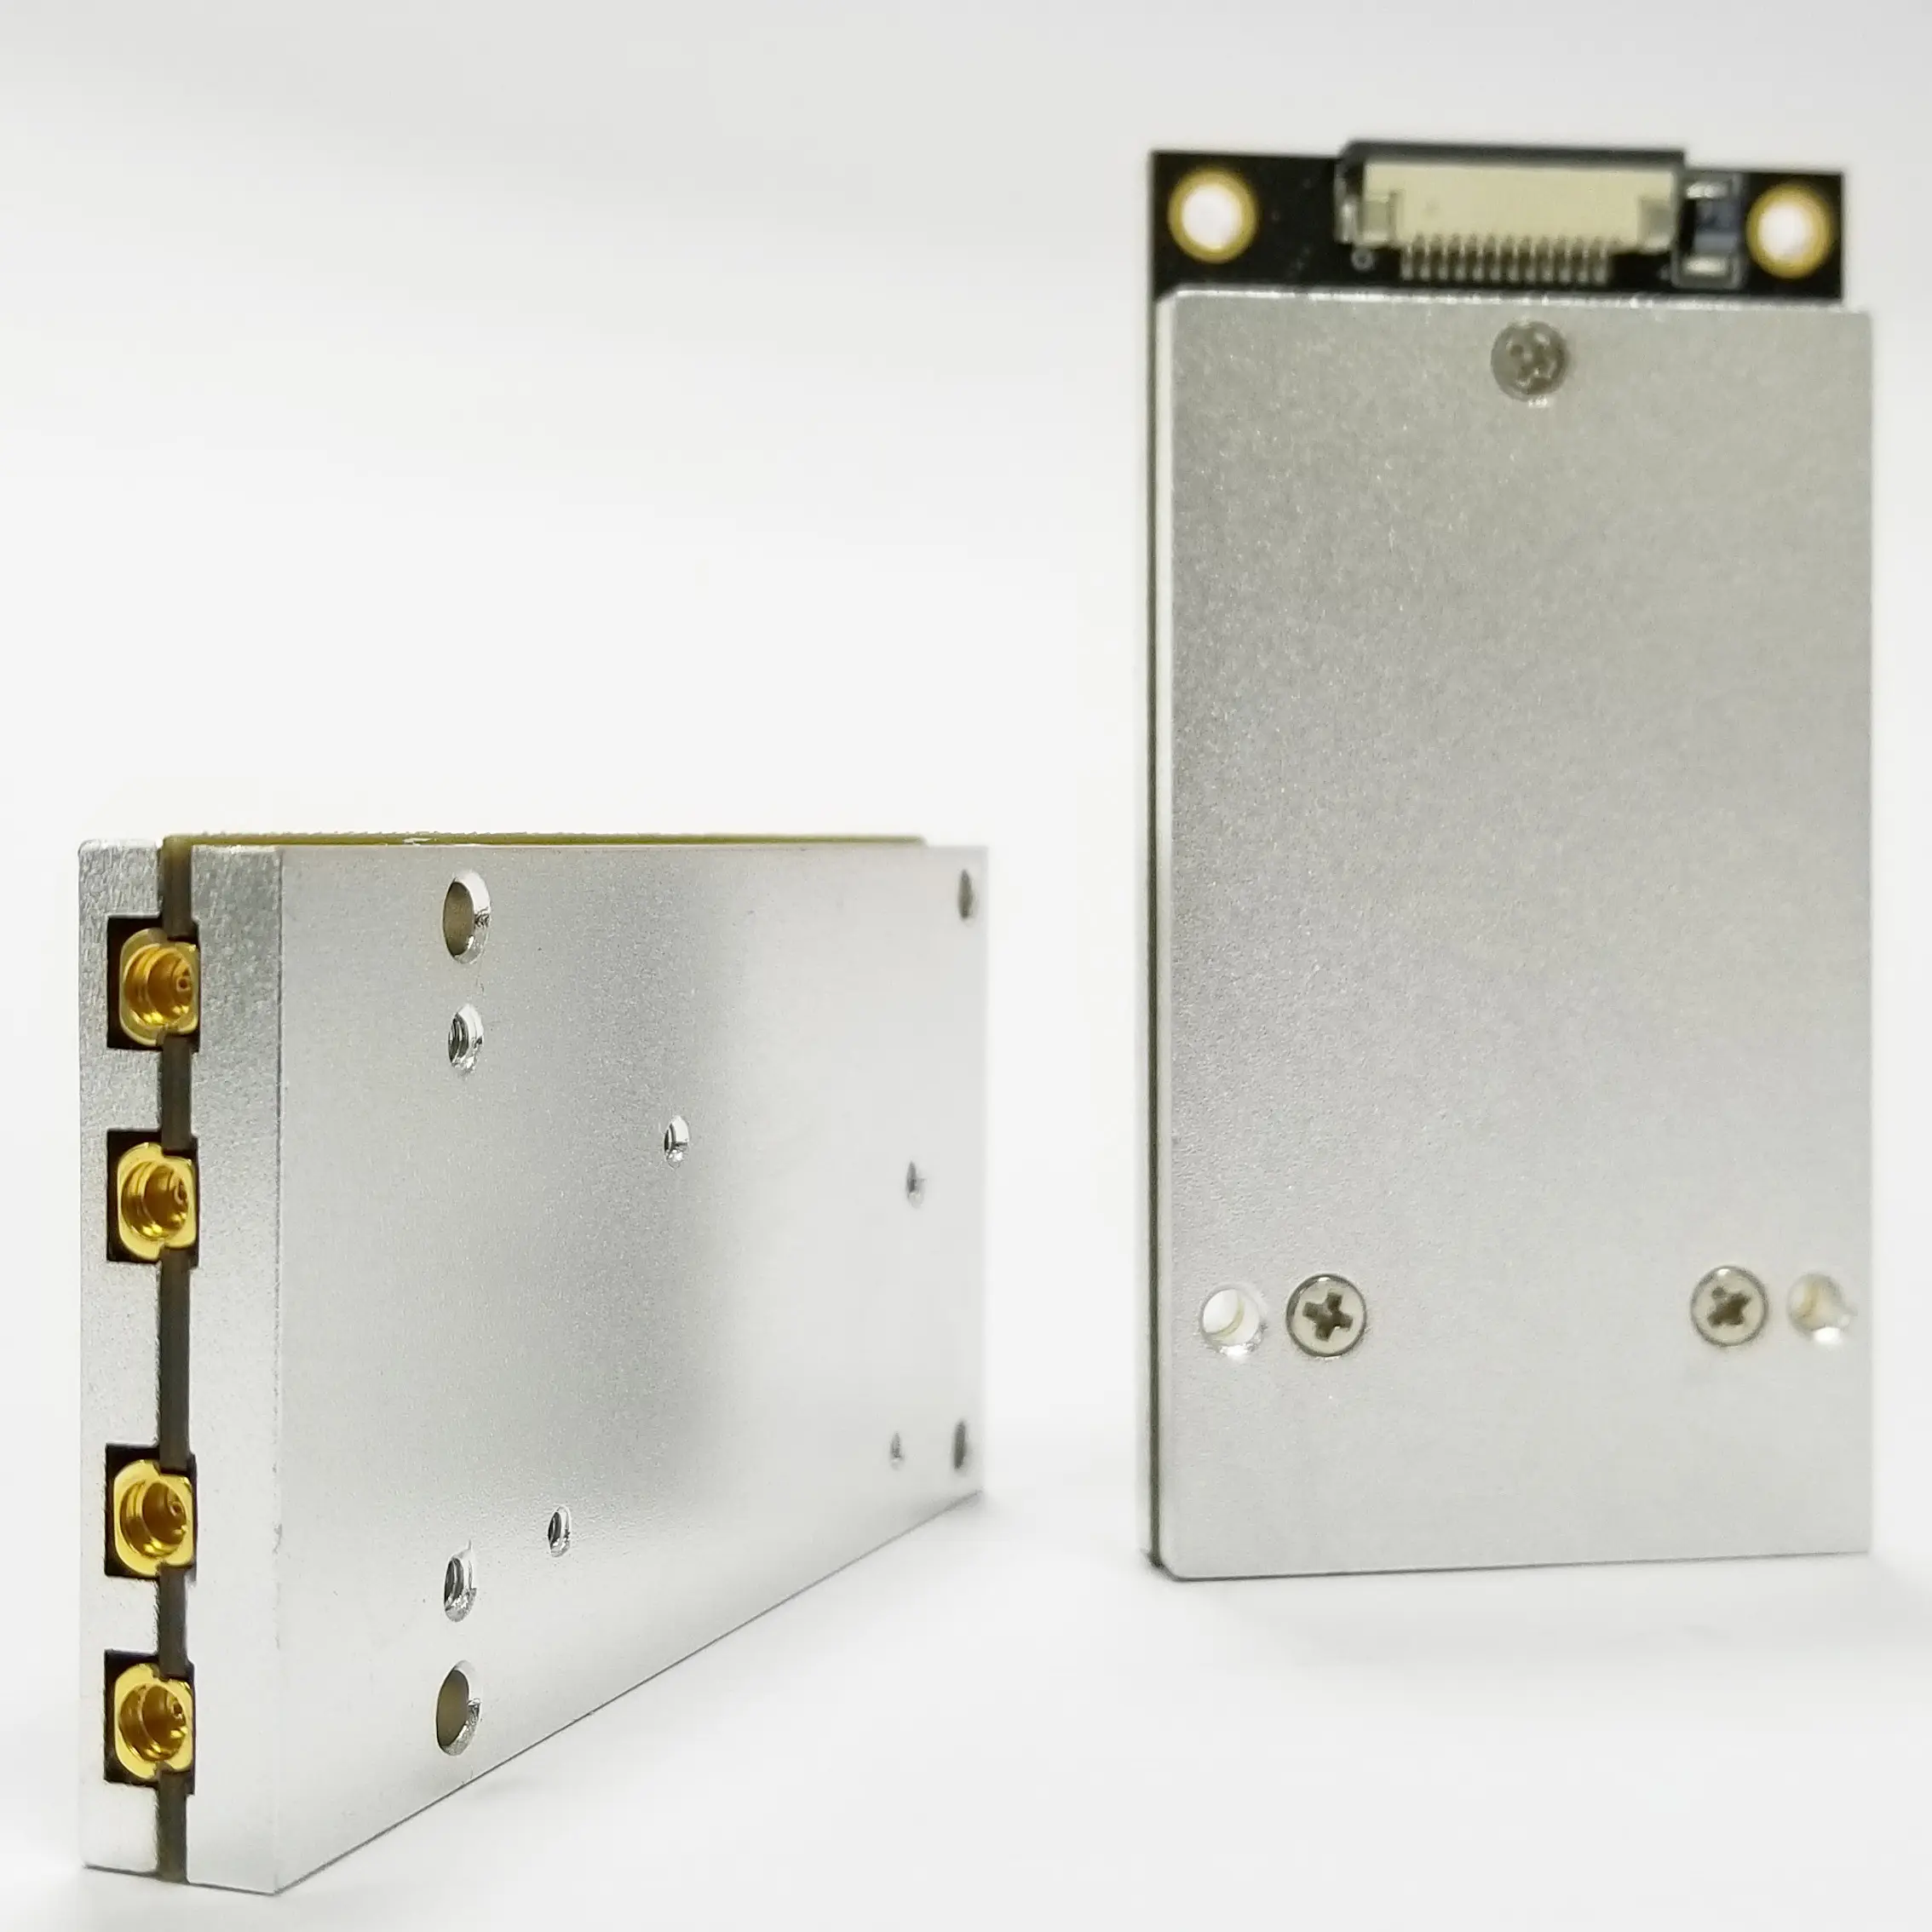 Winnix 33dbm 4 Ports UHF RFID Reader Module with Impinj R2000 RFID Module Chip